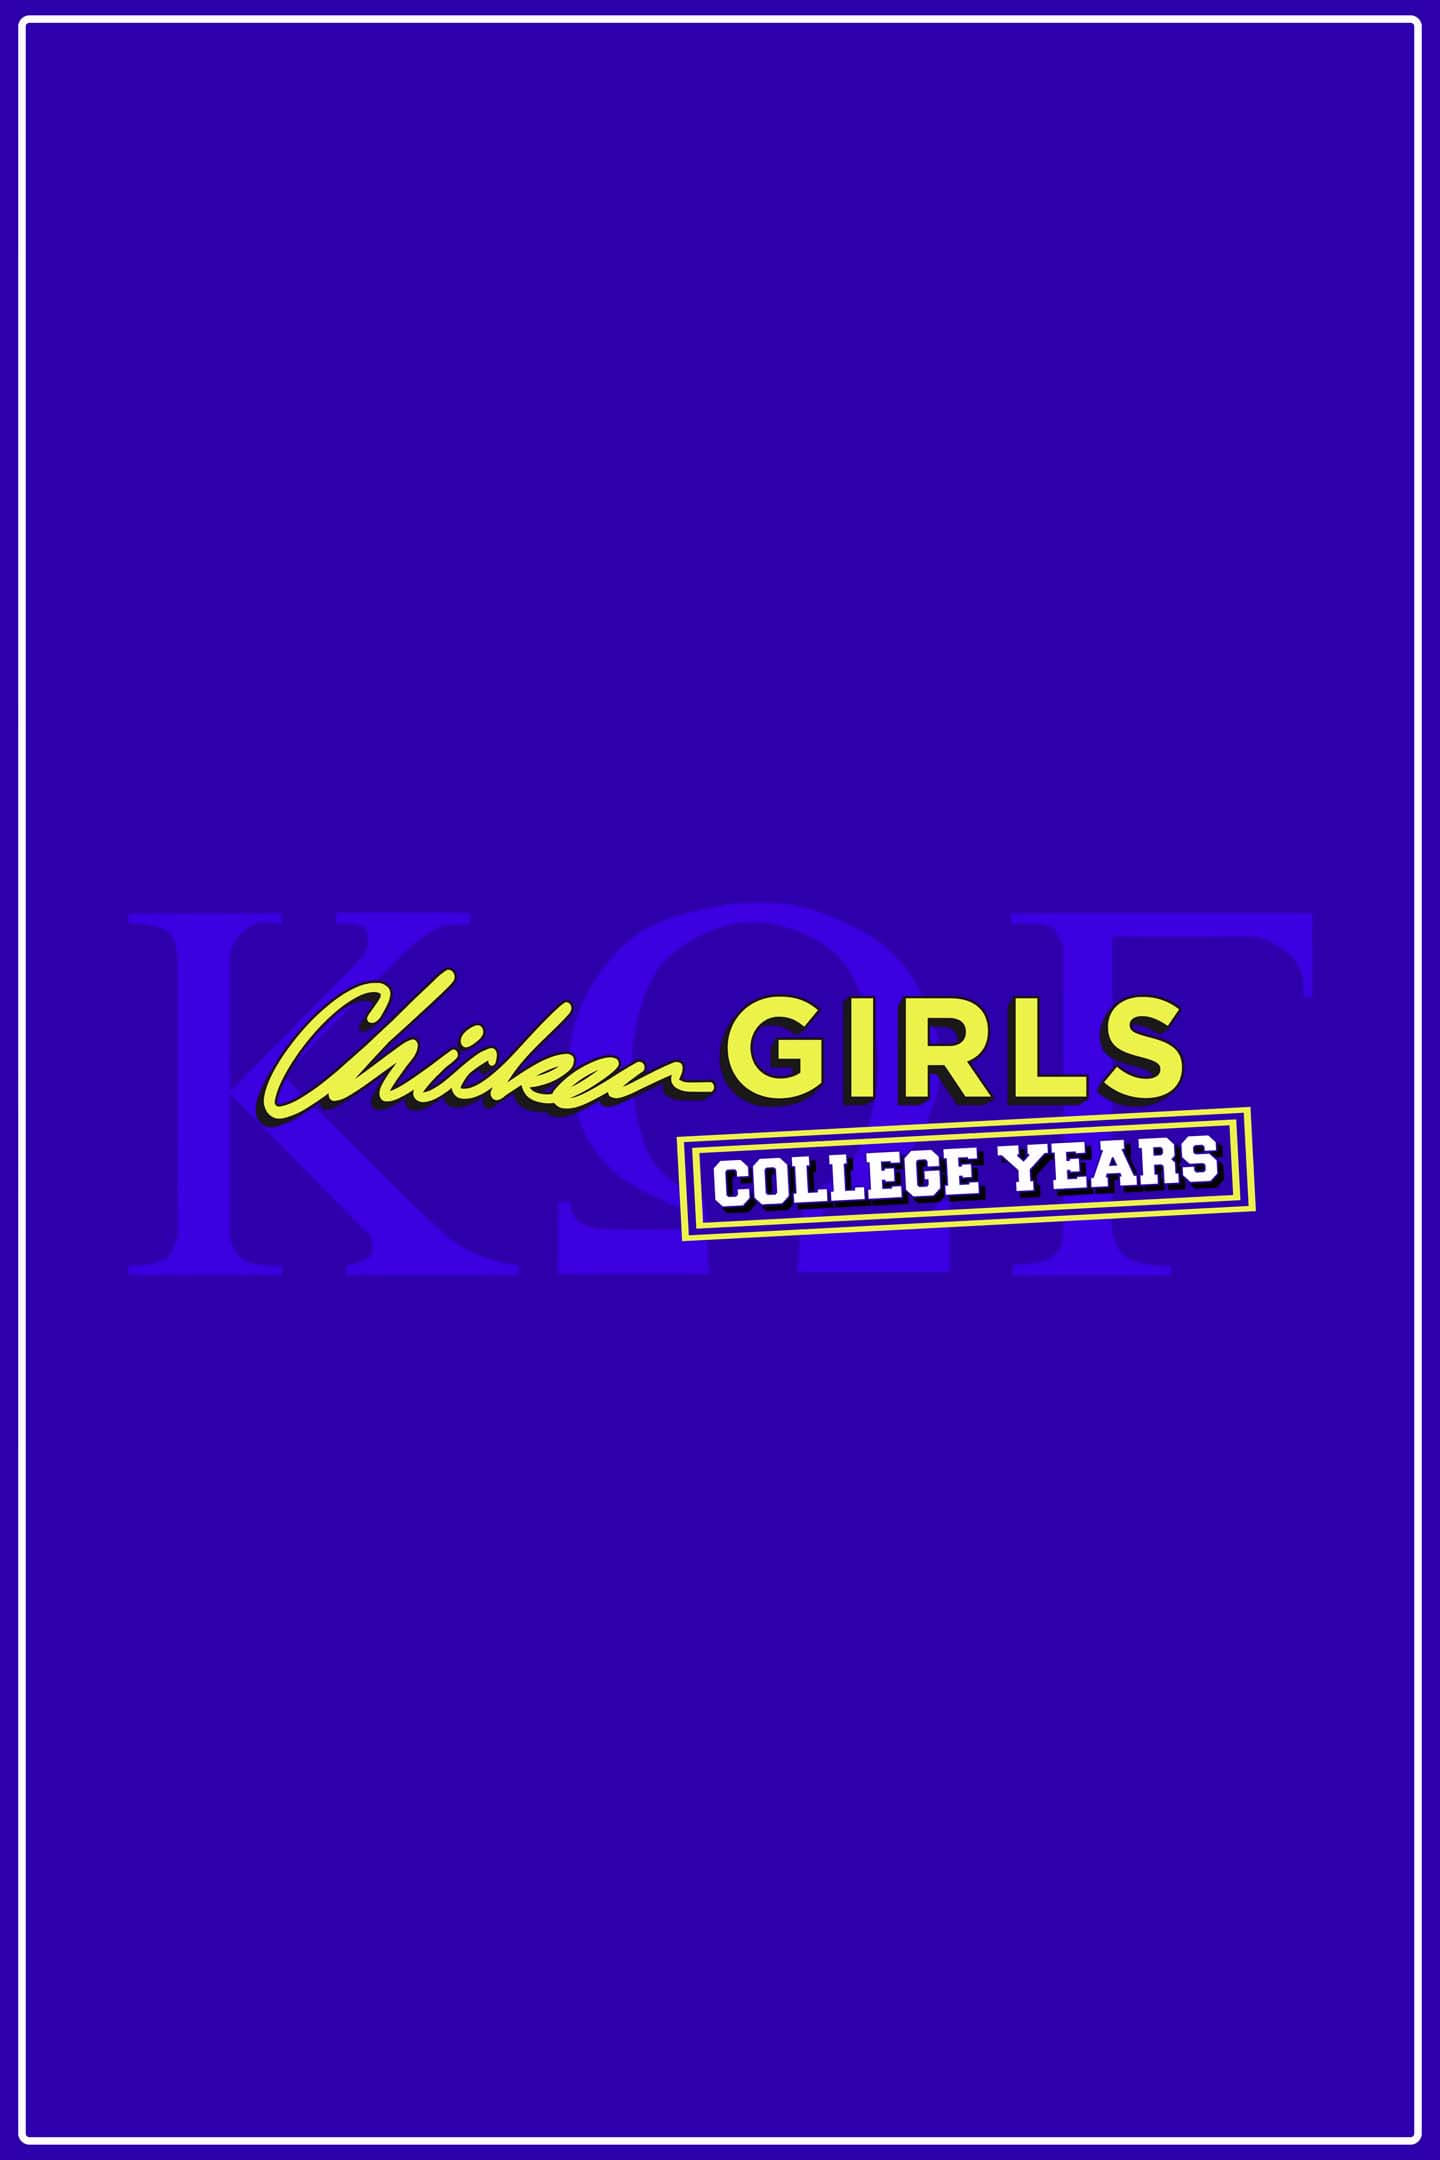 Chicken Girls: The College Years